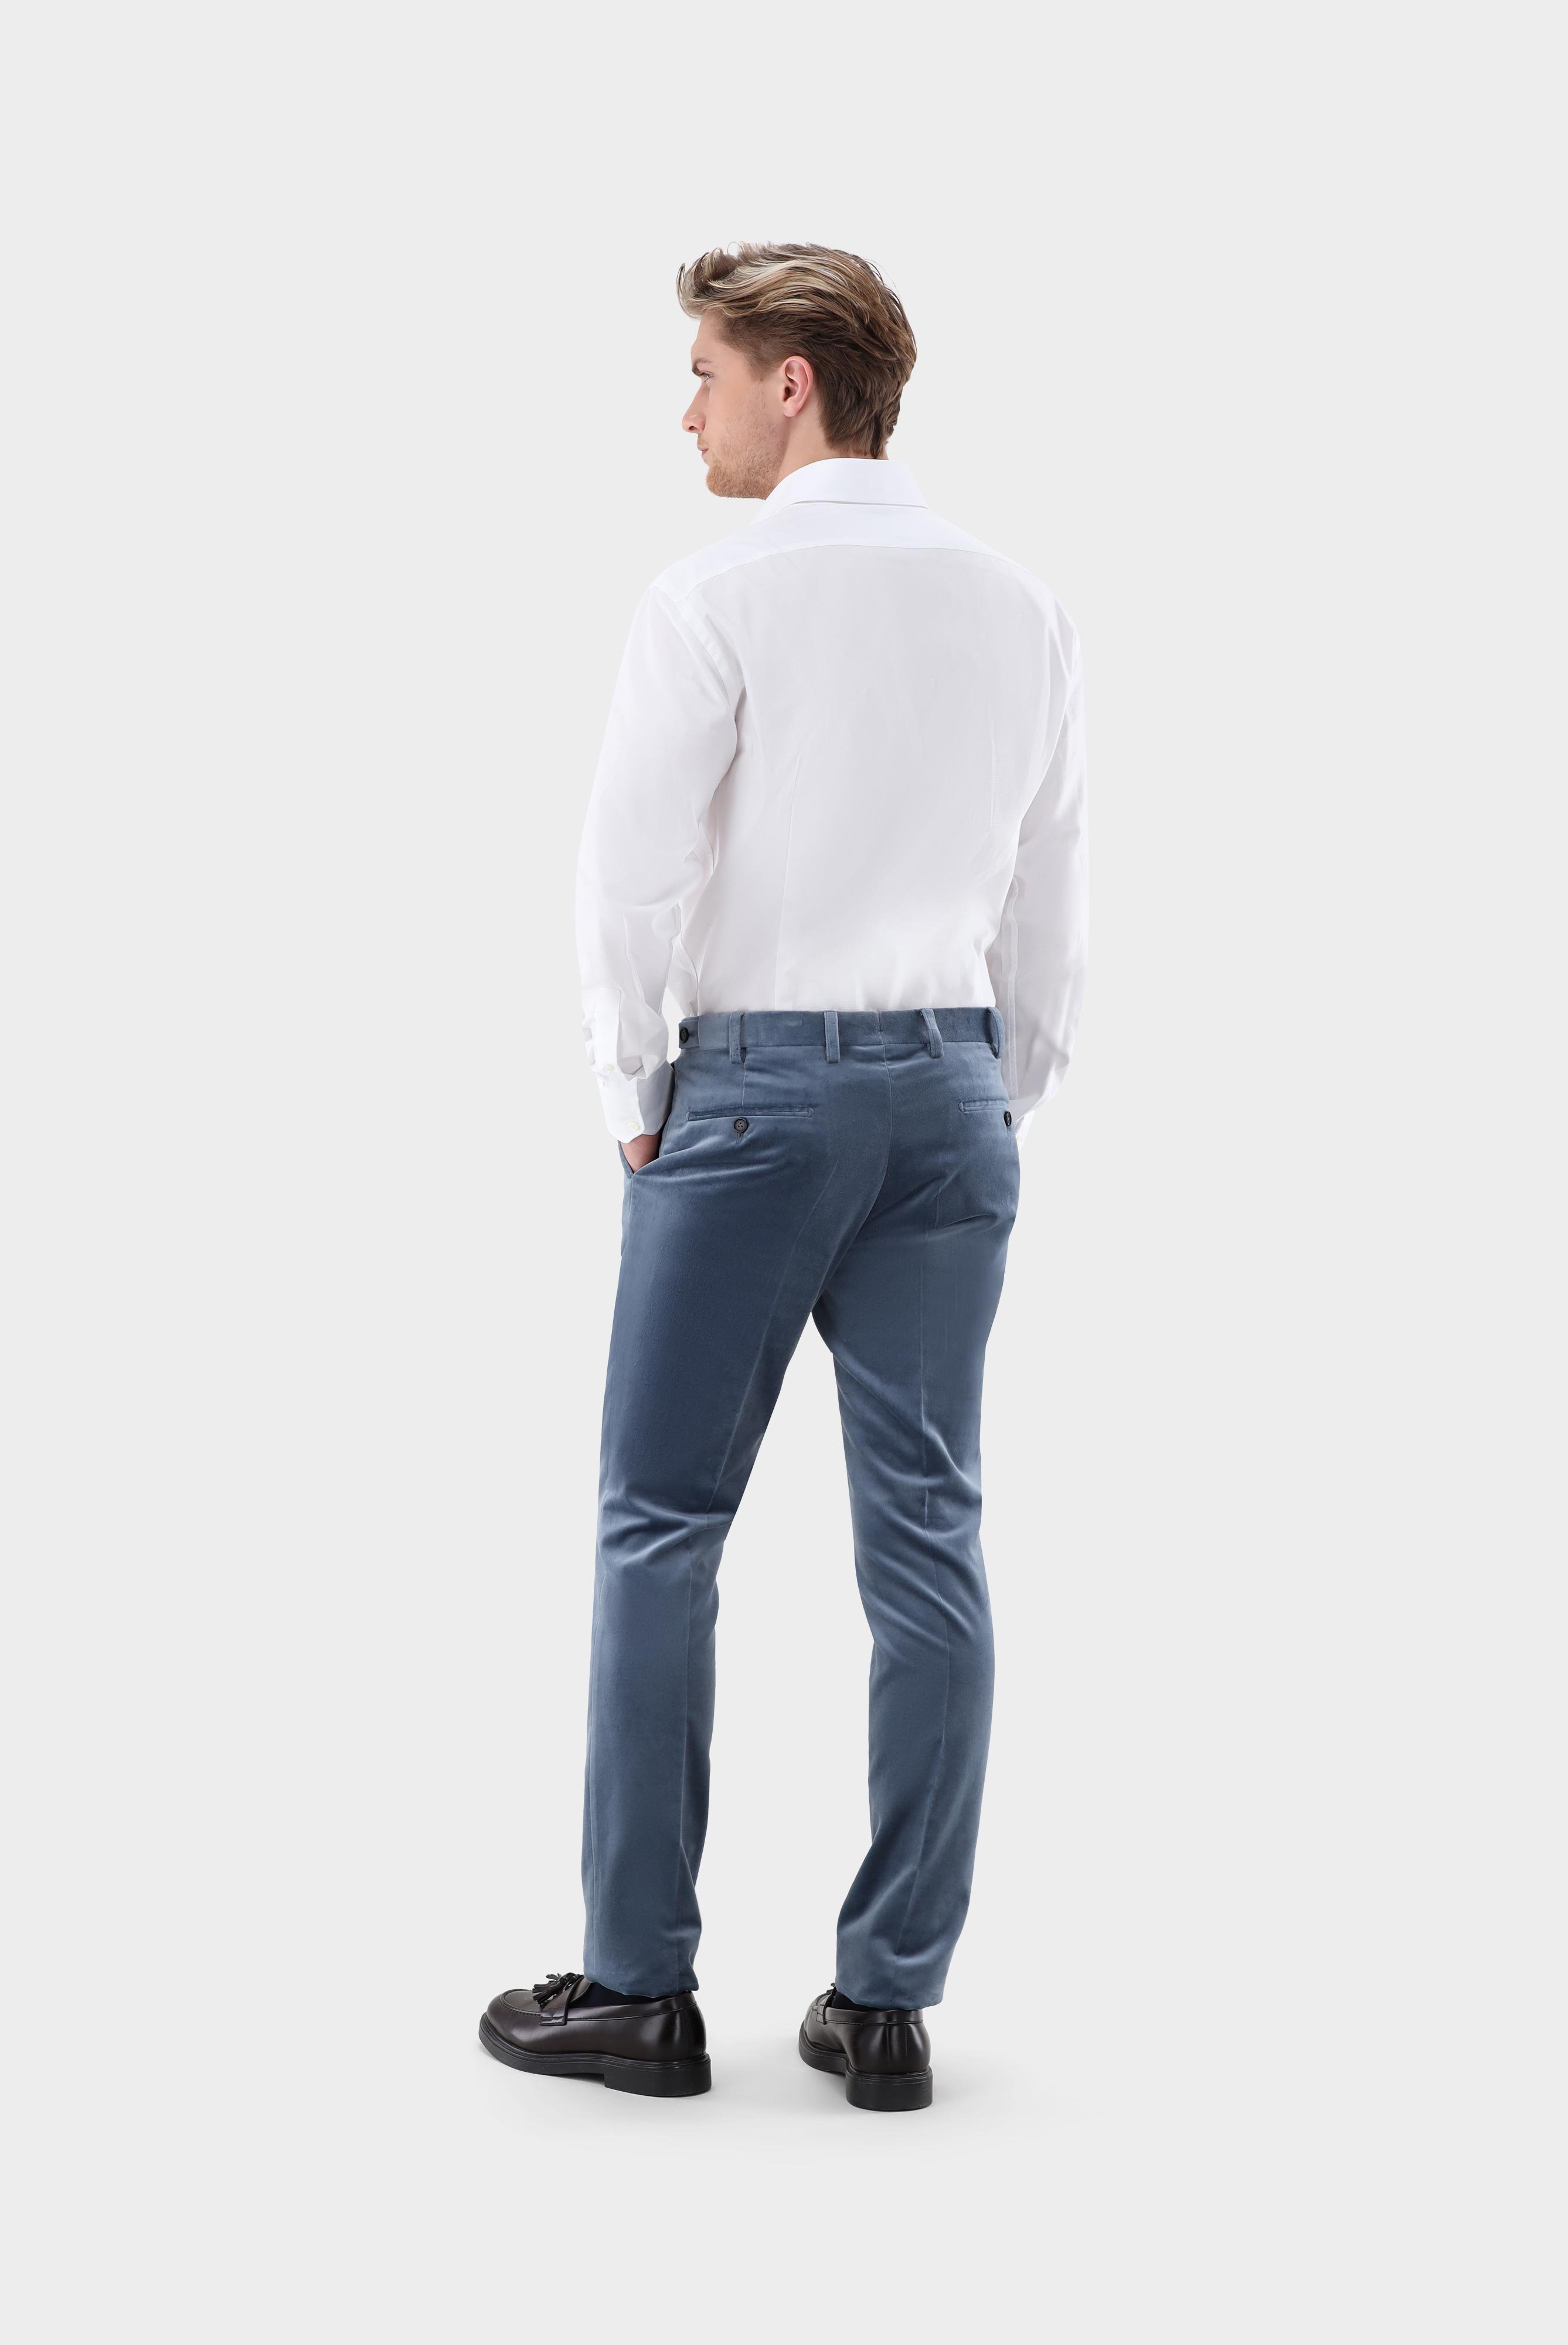 Jeans & Trousers+Cotton Velvet Trousers Slim Fit+20.7854.16.H00847.740.50